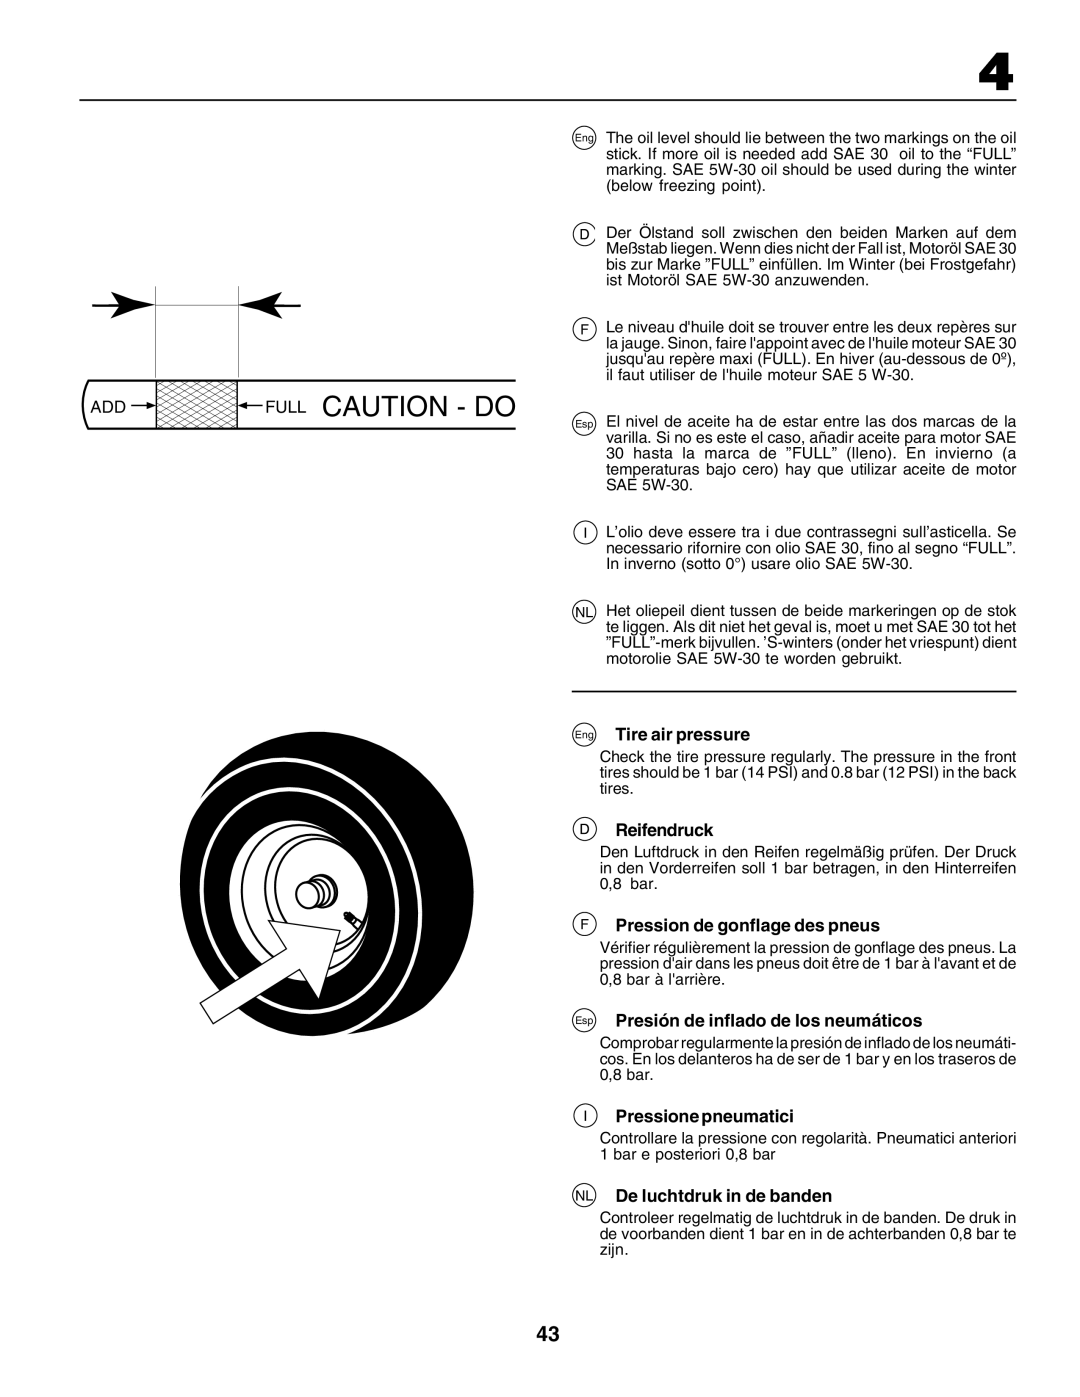 Husqvarna GTH250 instruction manual Full Caution - Do, Eng Tire air pressure, Reifendruck, F Pression de gonflage des pneus 